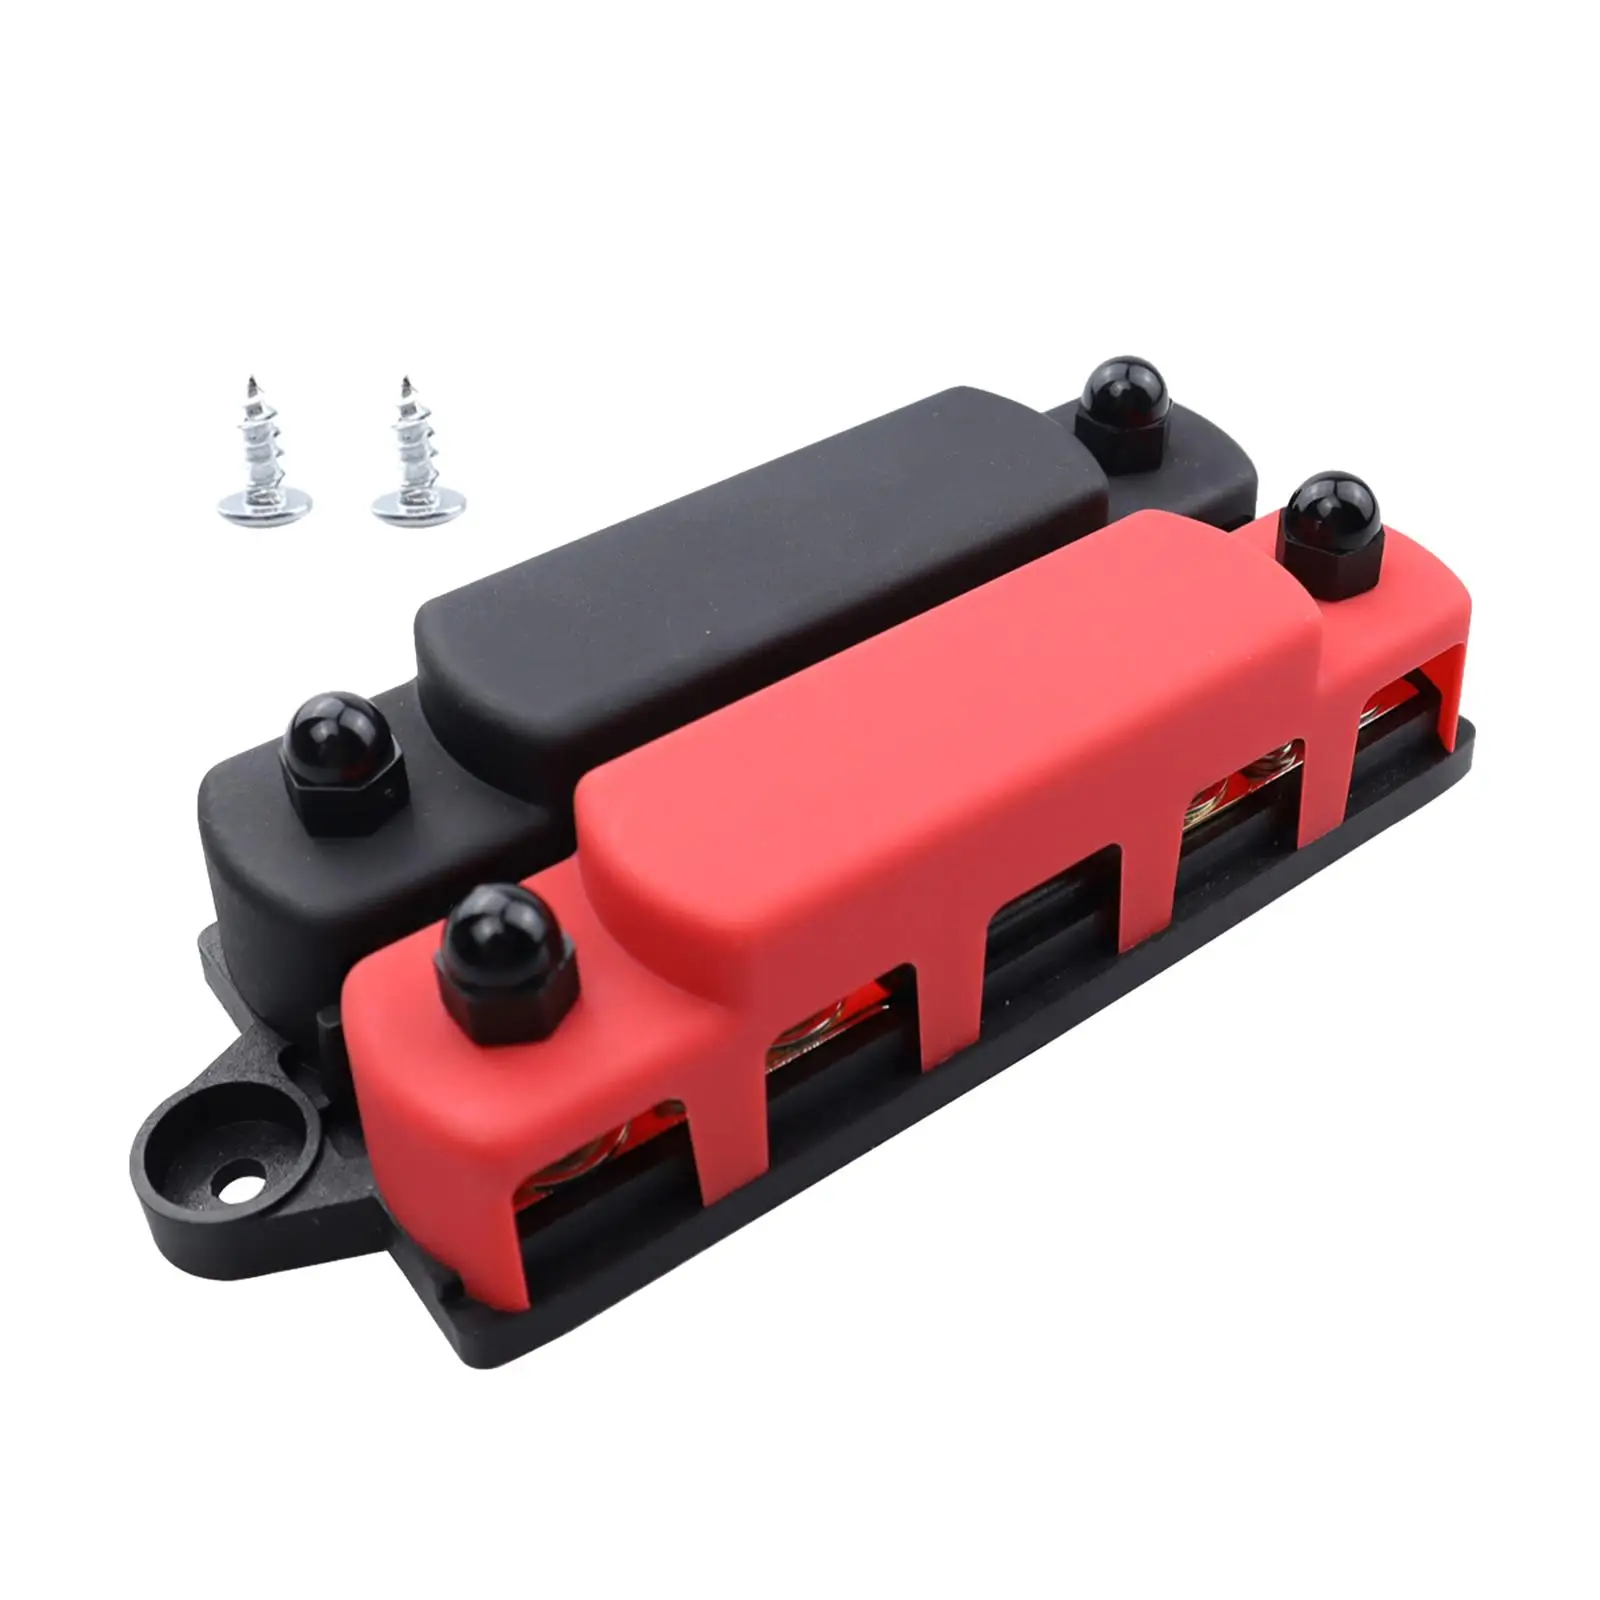 4 Post Power Distribution Block Bus Bar Easy to Install Marine Battery Ground Distribution Block for Car Marine RV Trailer